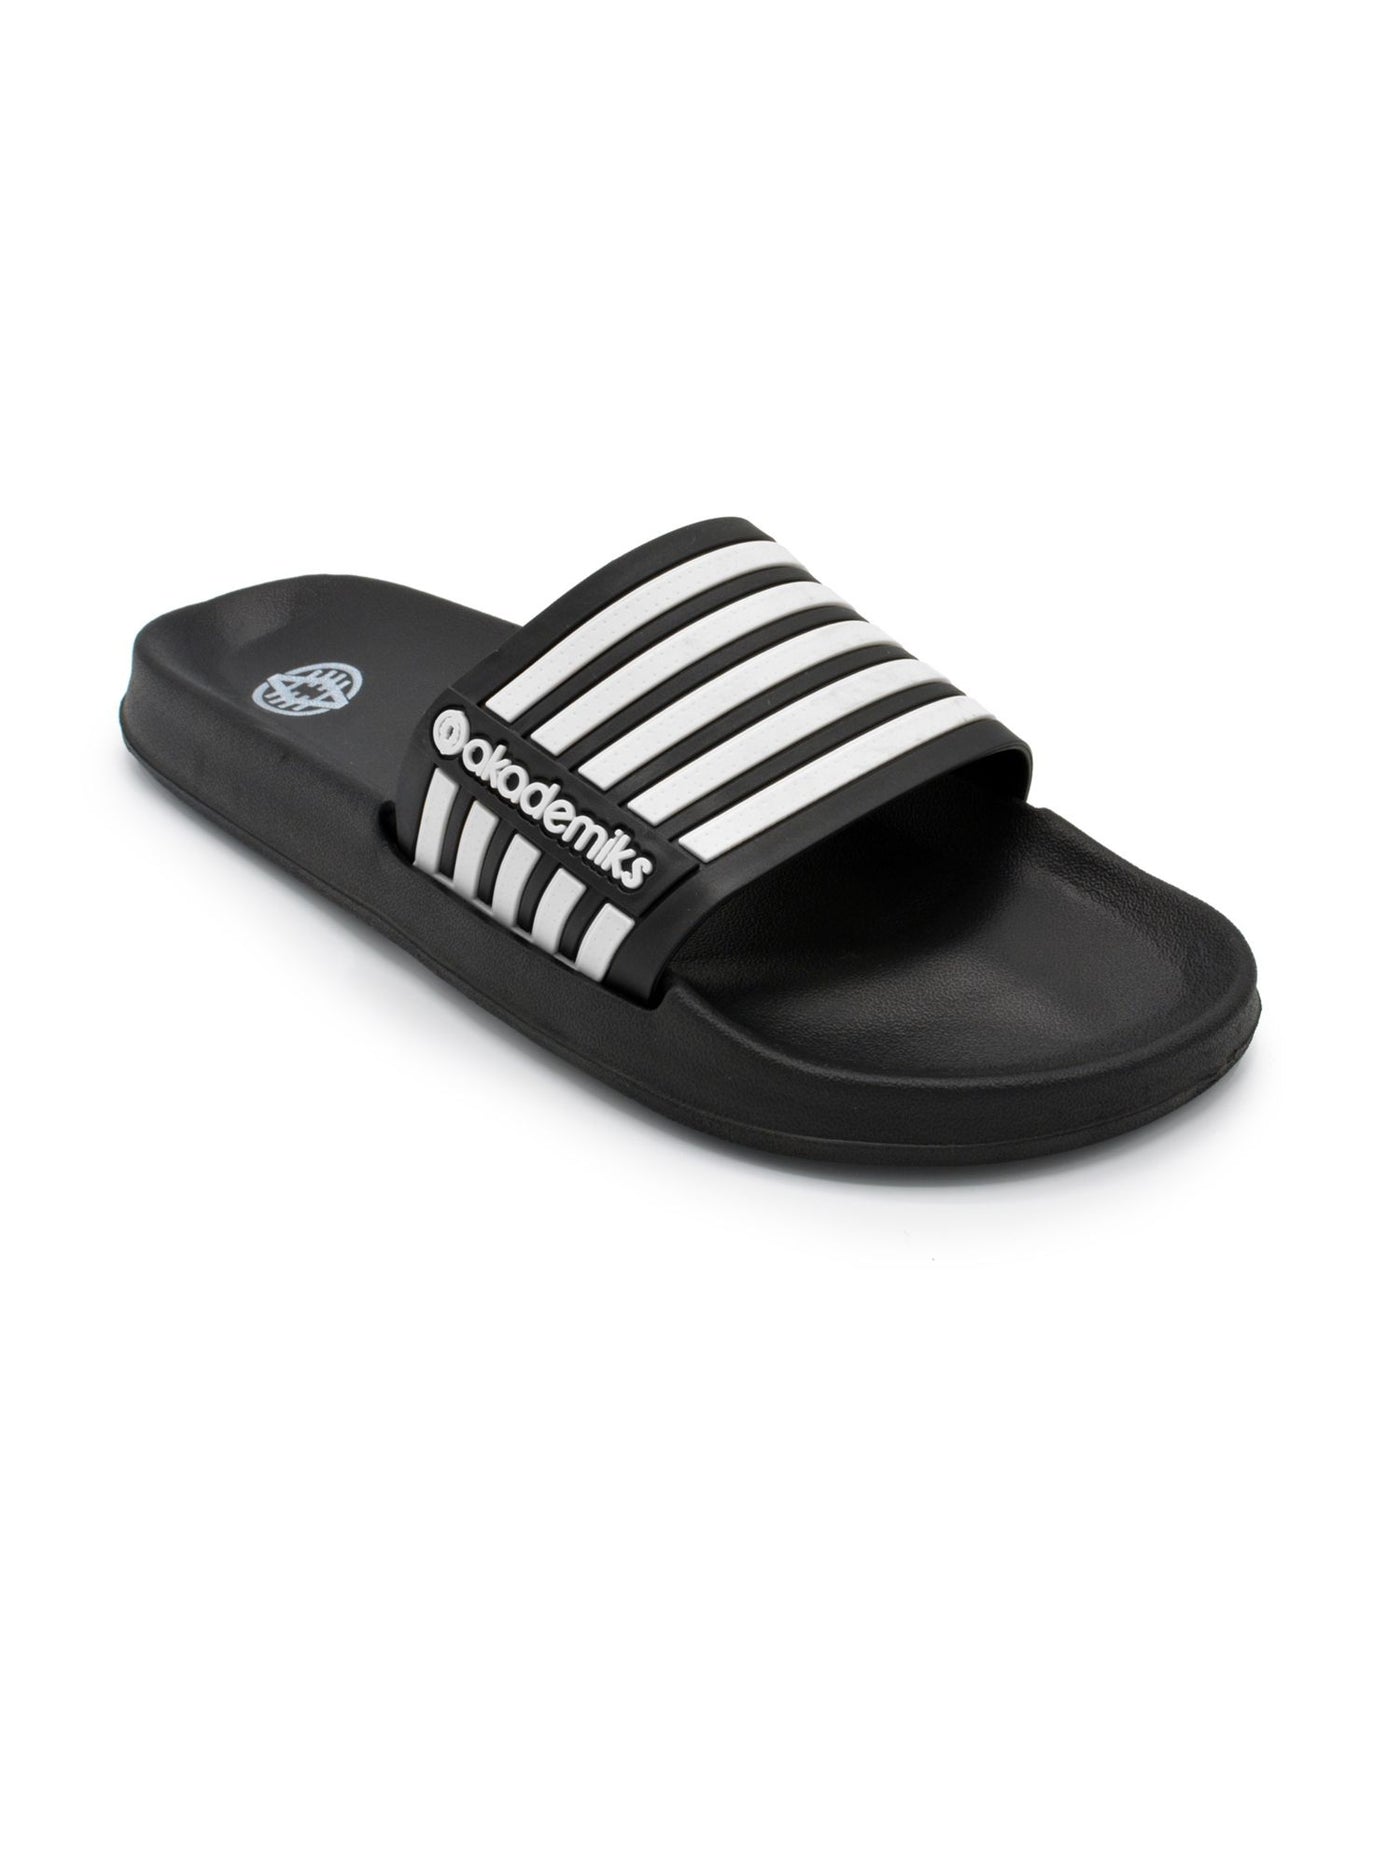 AKADEMIKS Mens Black Striped Comfort Akademiks Round Toe Slip On Slide Sandals Shoes 43